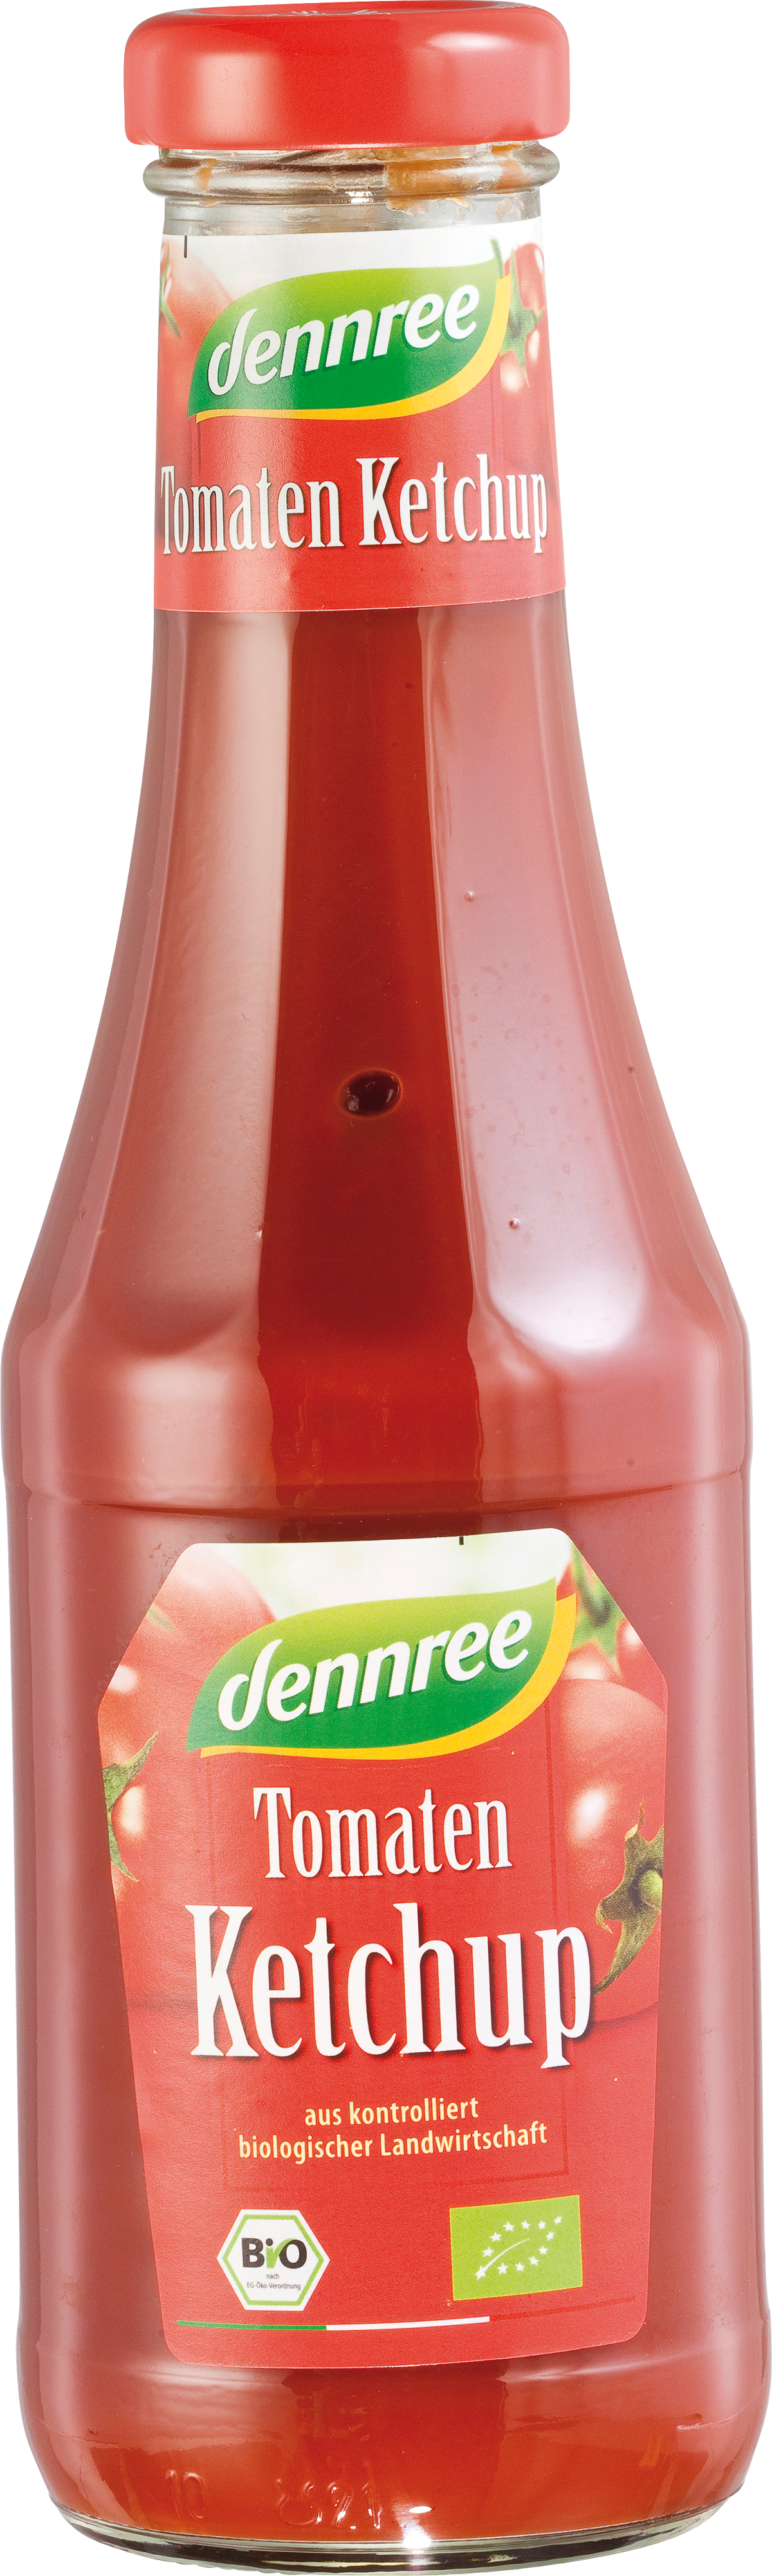 Dennree Tomaten Ketchup 500ml Glasflasche